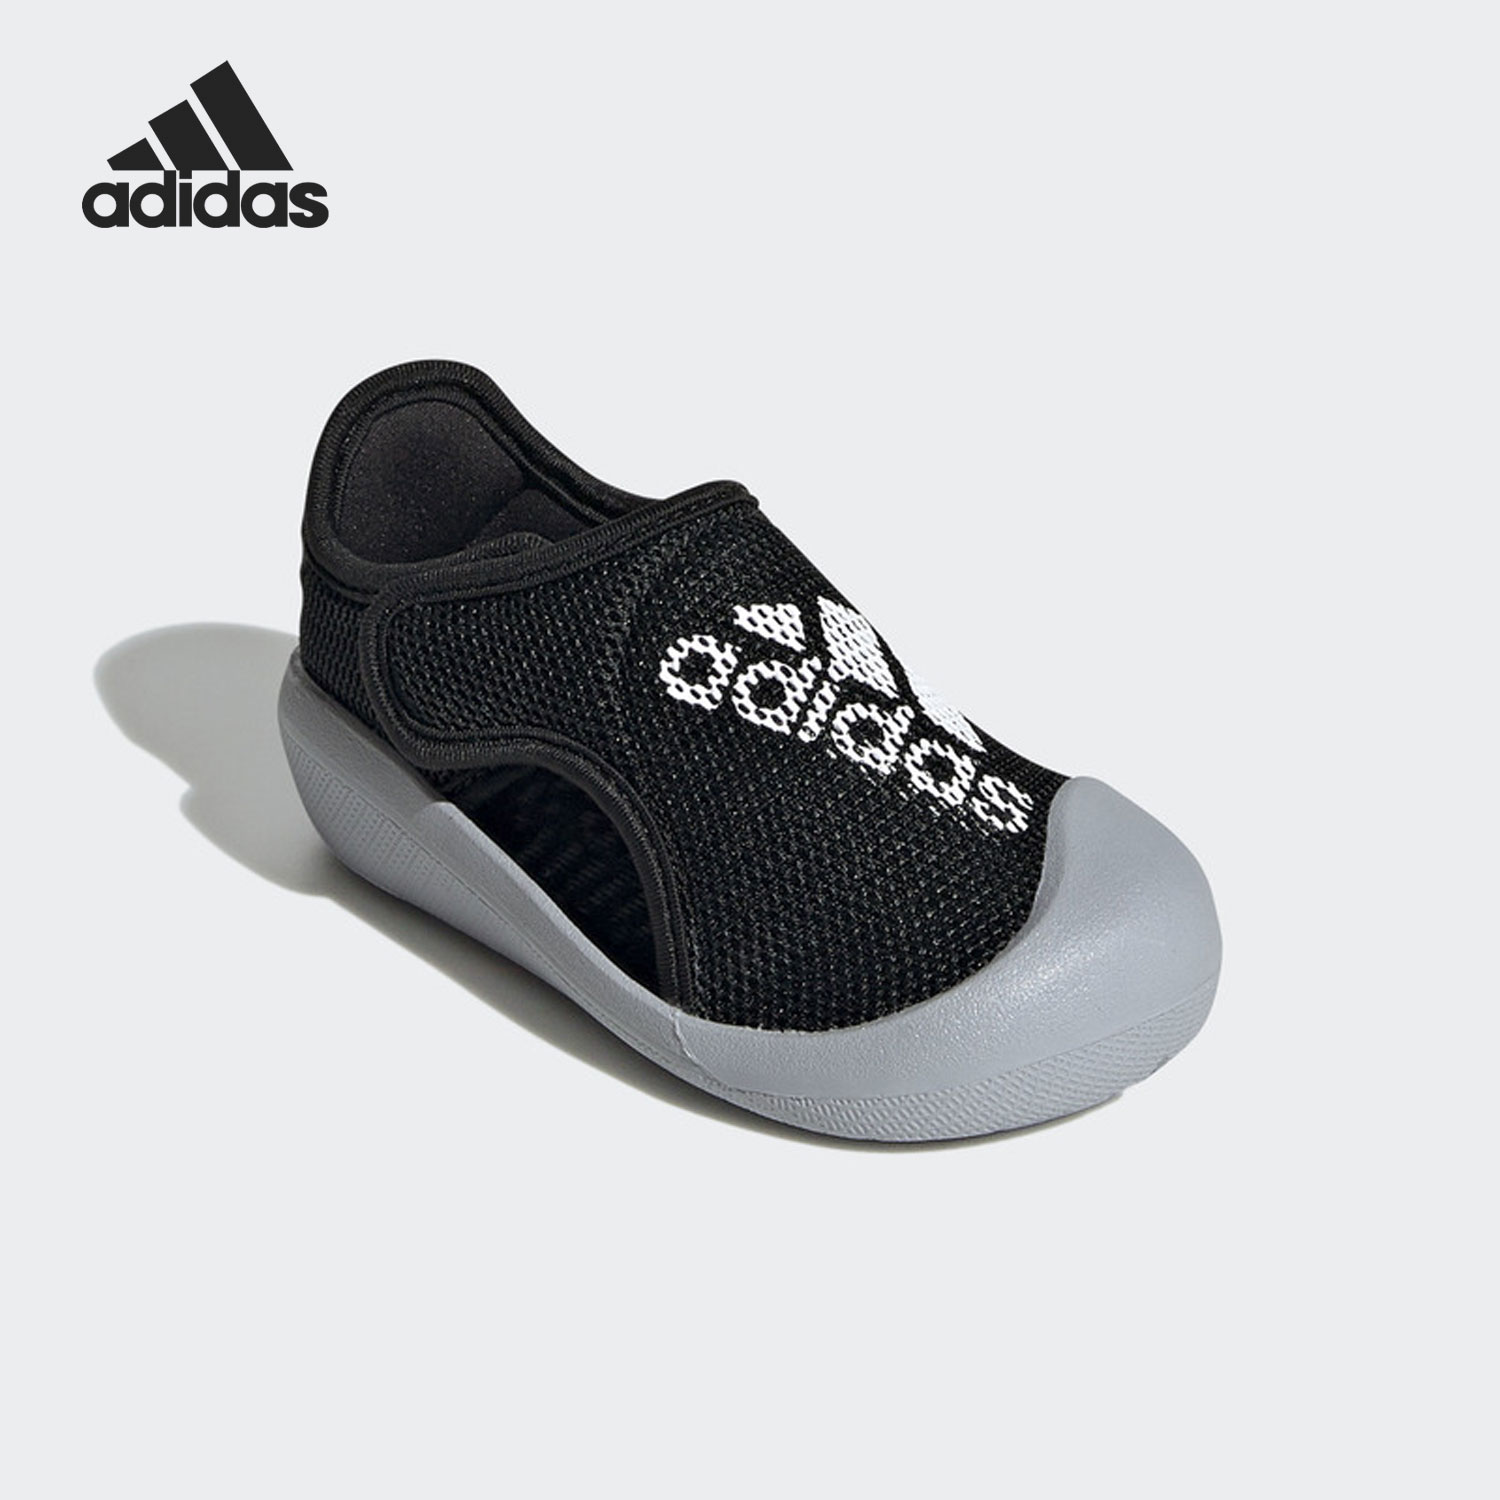 Adidas/阿迪达斯正品春夏新款婴童运动包头凉鞋GV7812